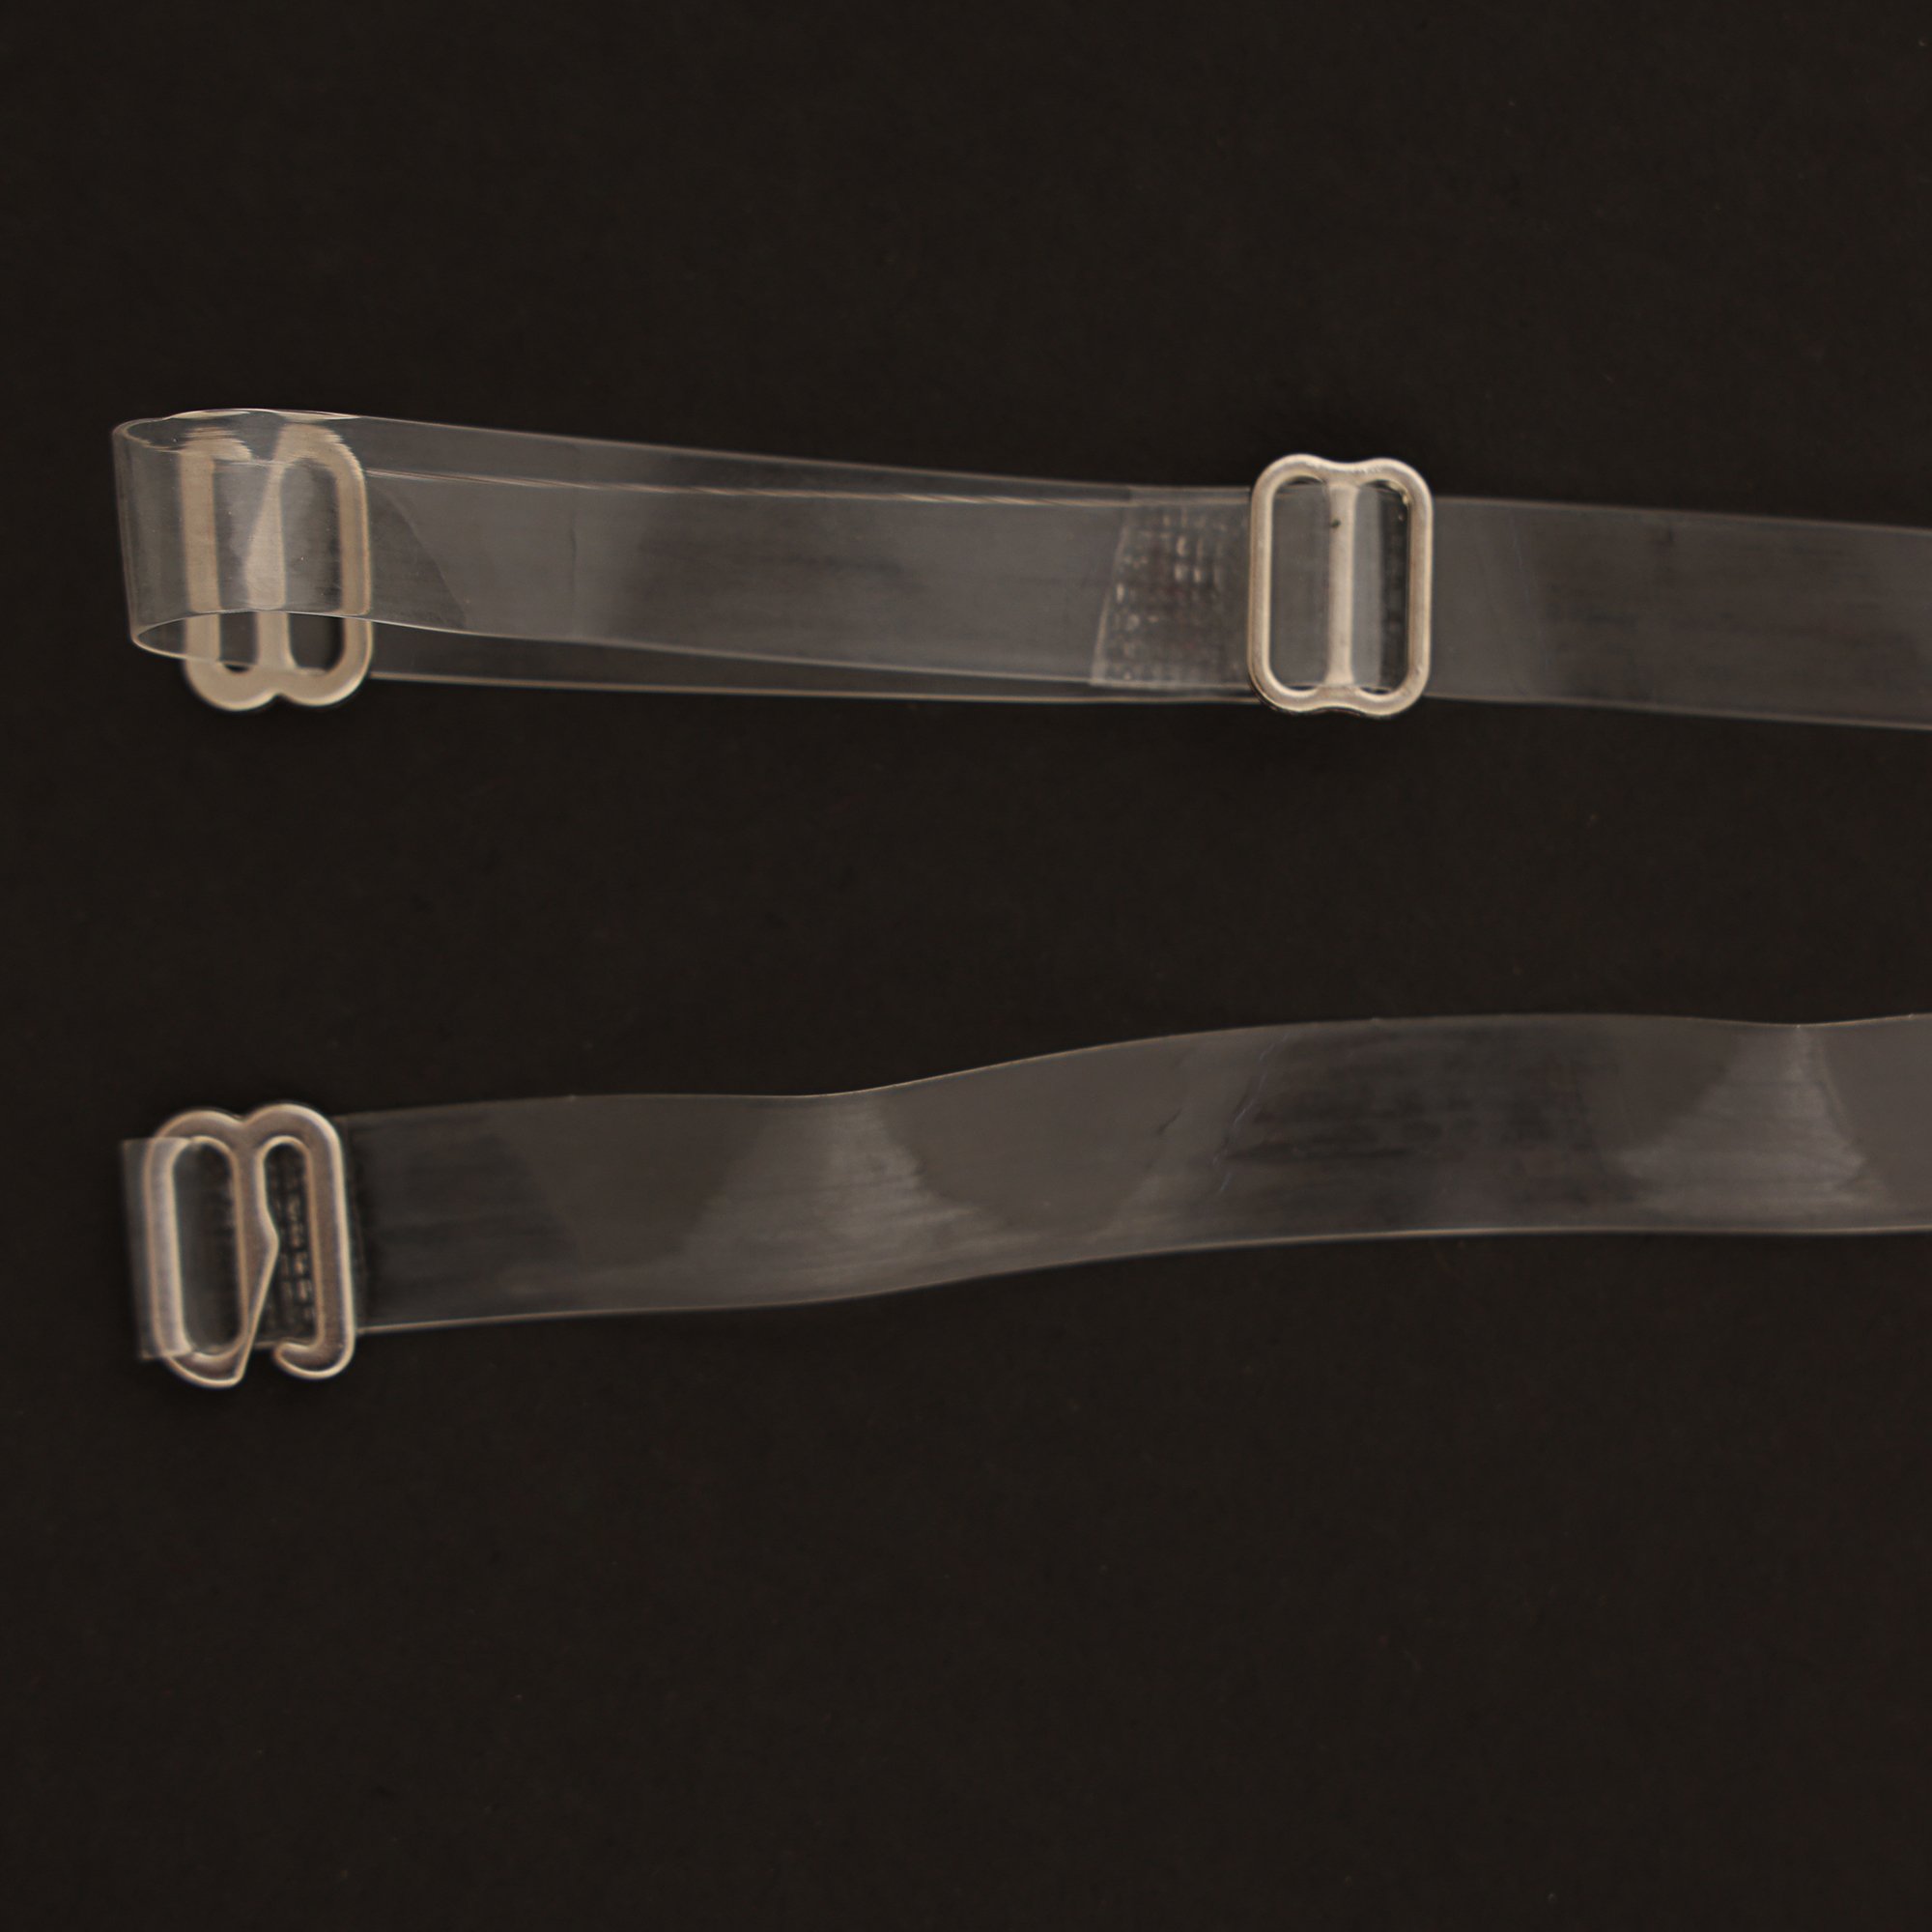 Pair Adjustable Detachable Transparent Clear Invisible Bra Straps